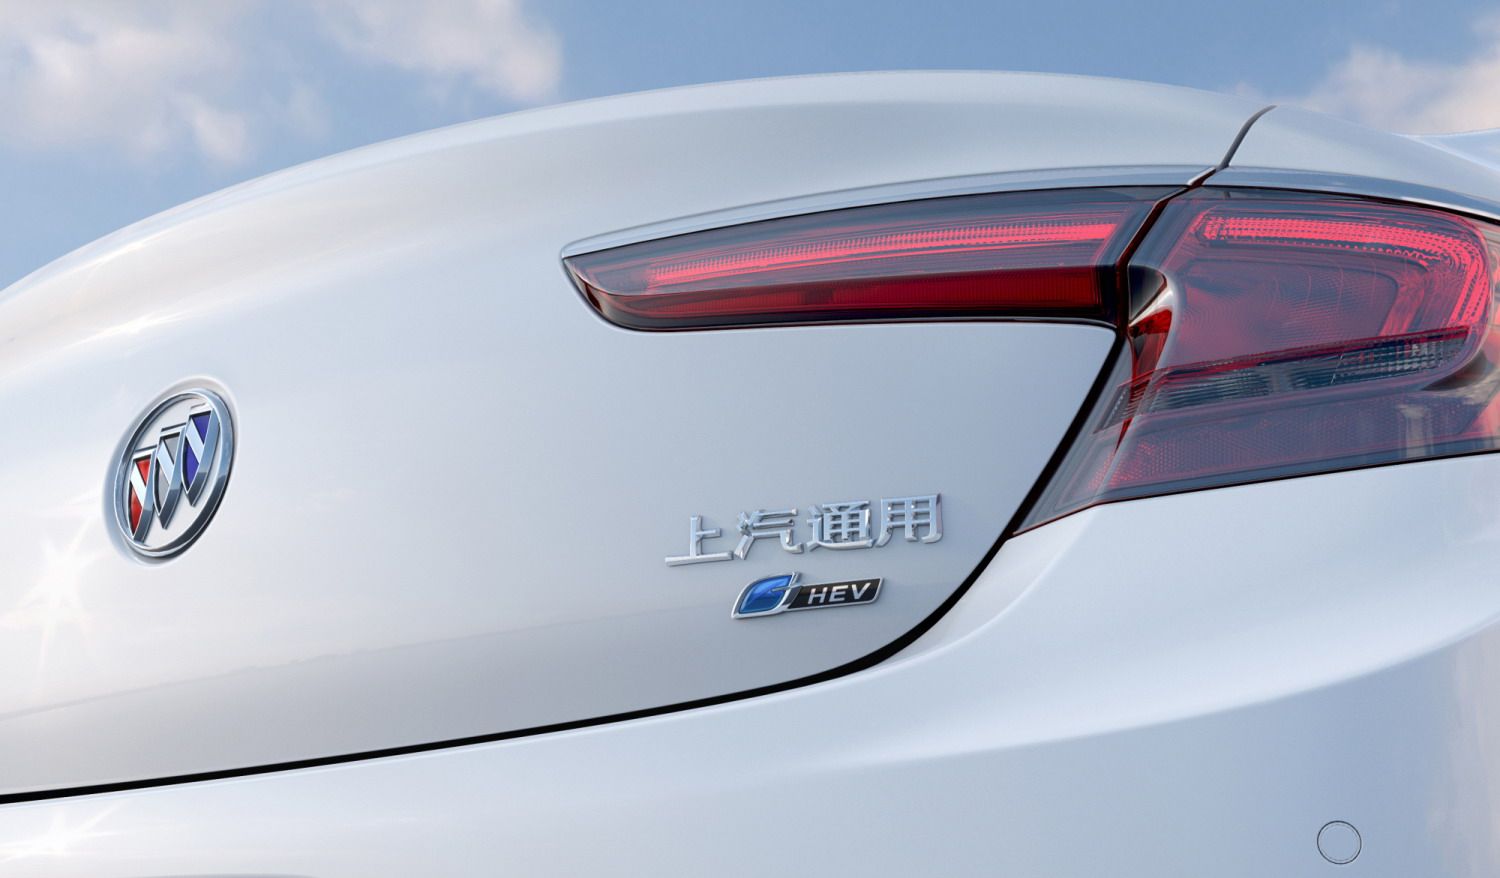 2017 Buick LaCrosse Hybrid Electric Vehicle